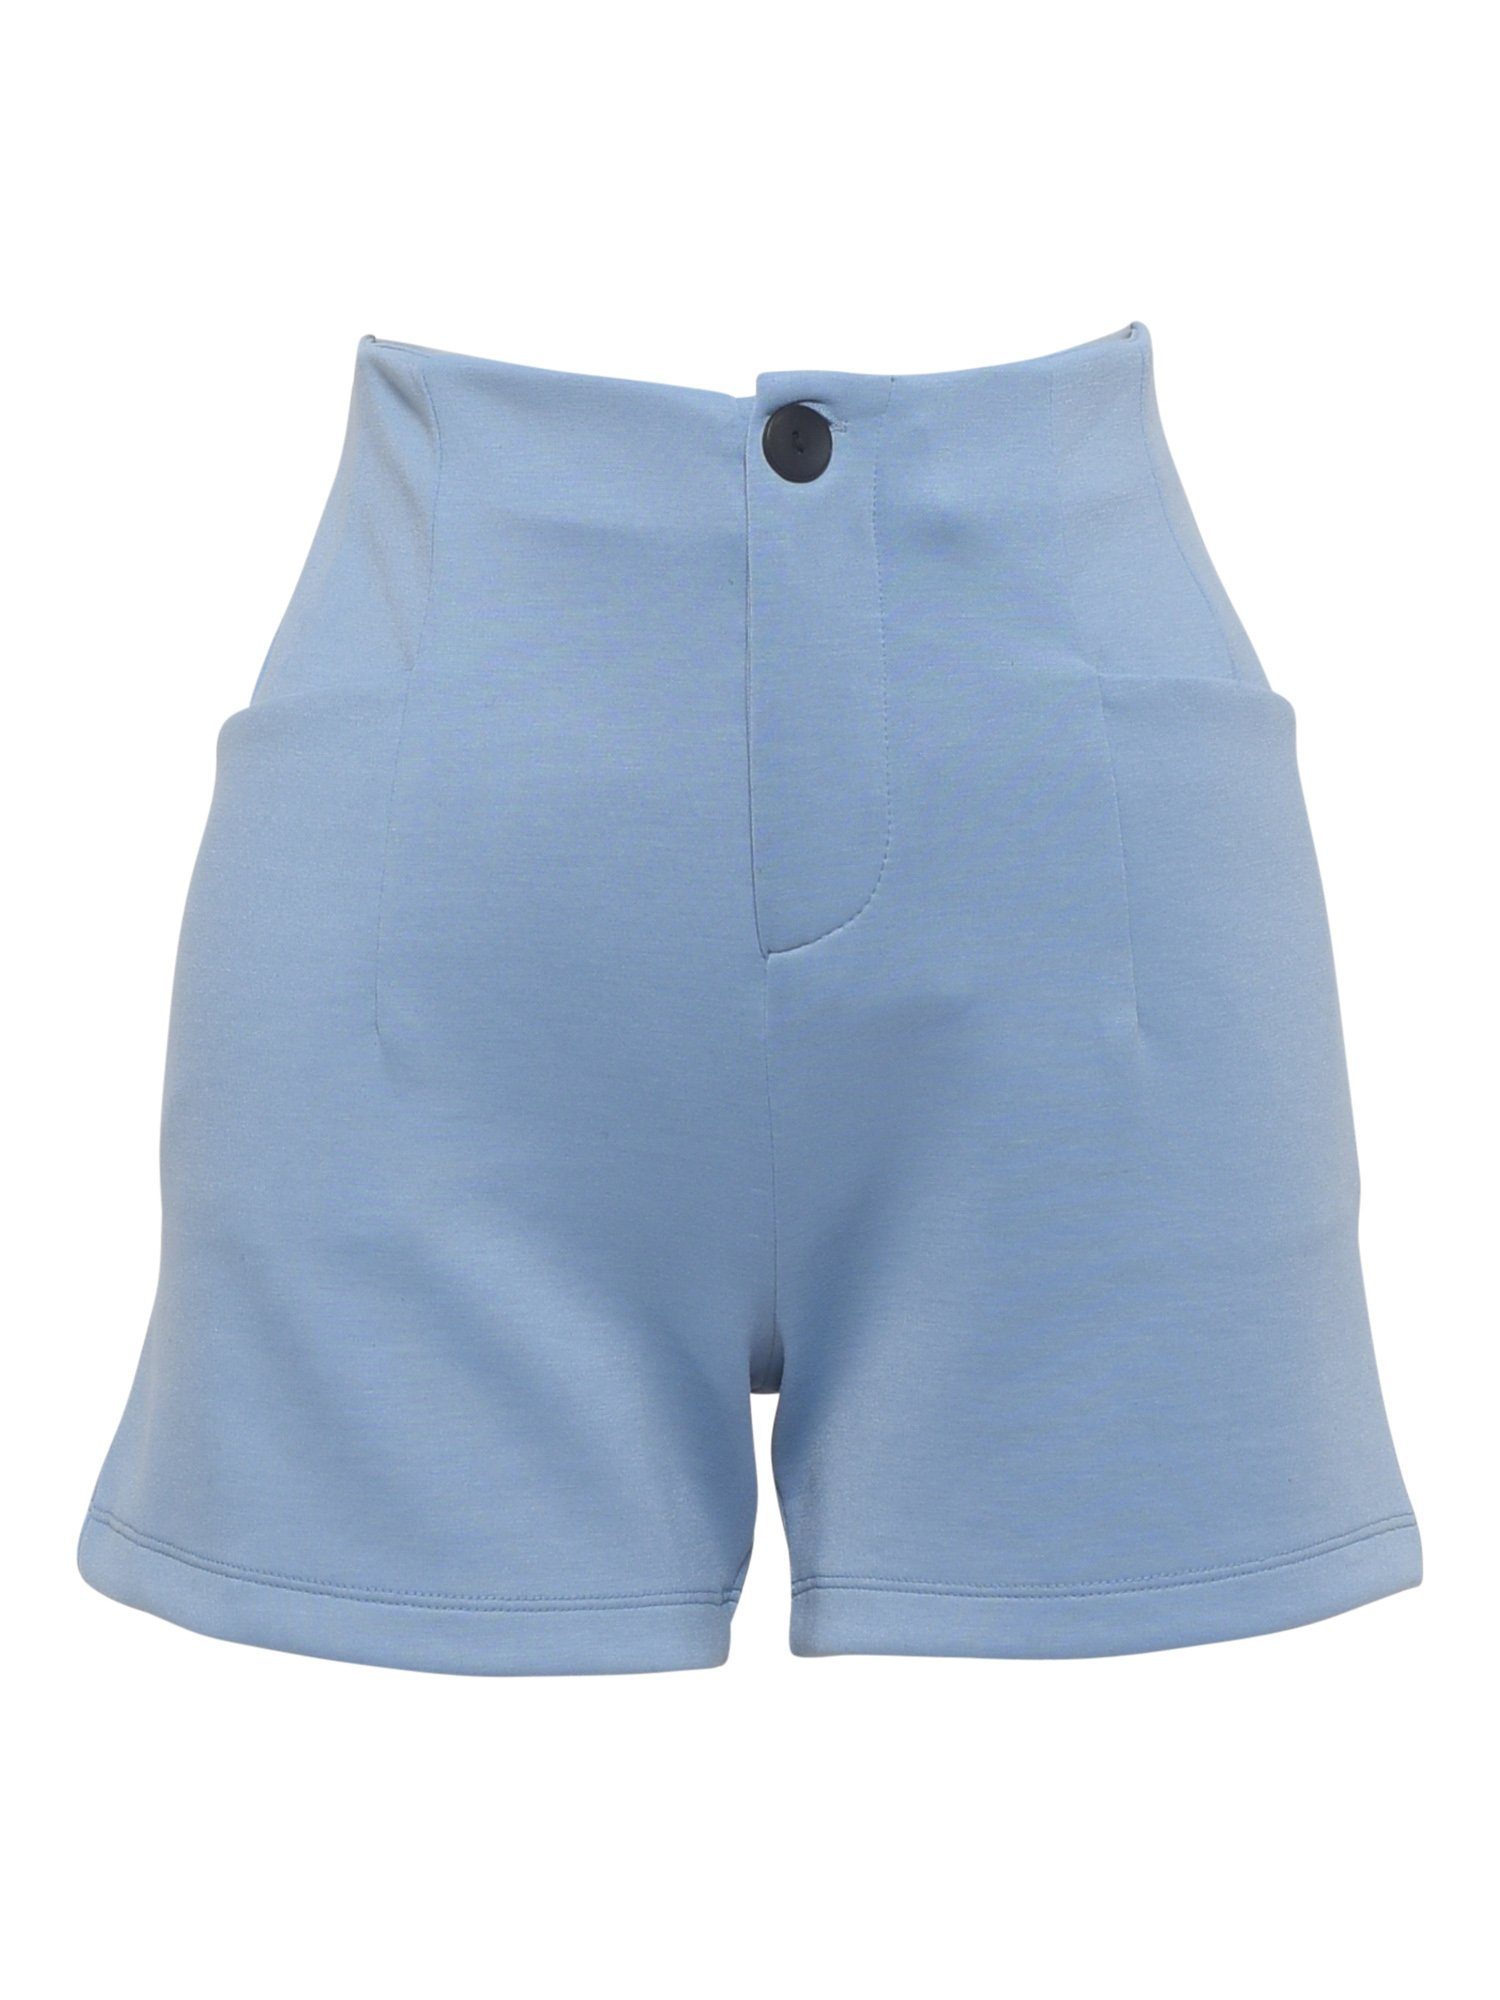 Shorts 'Wilma' Freshlions blau Shorts